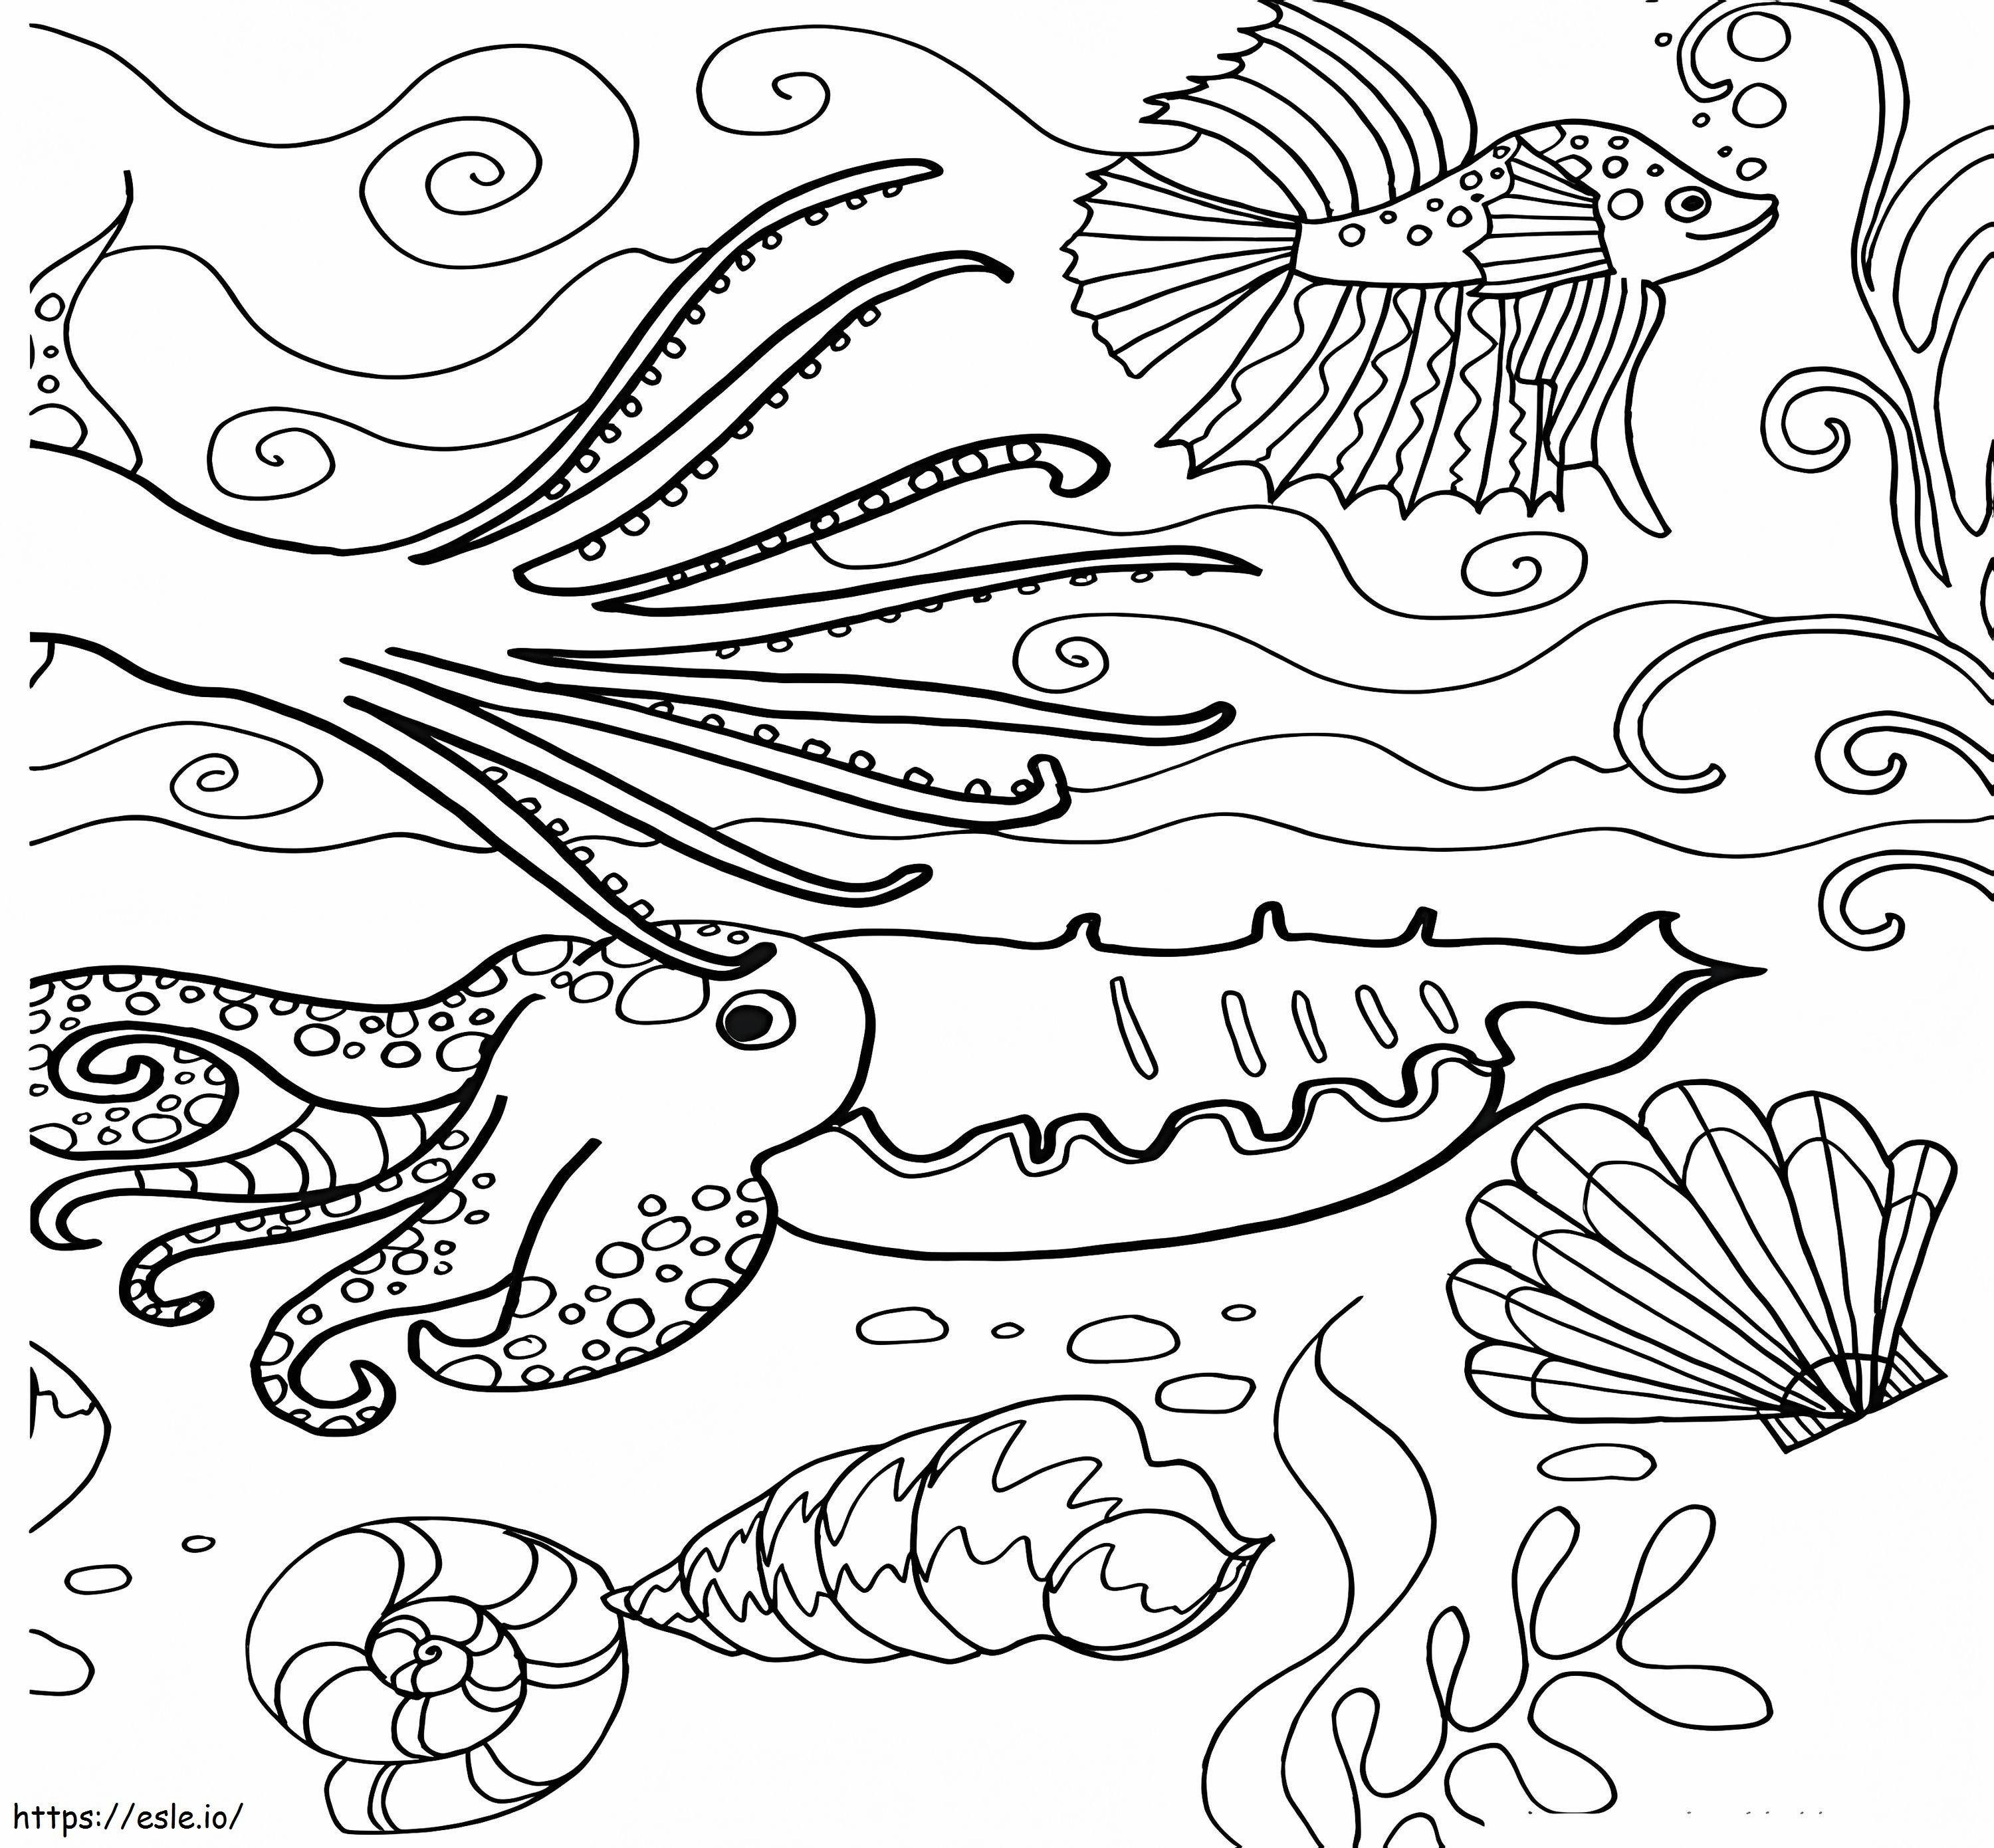 Nice Ocean Scene coloring page